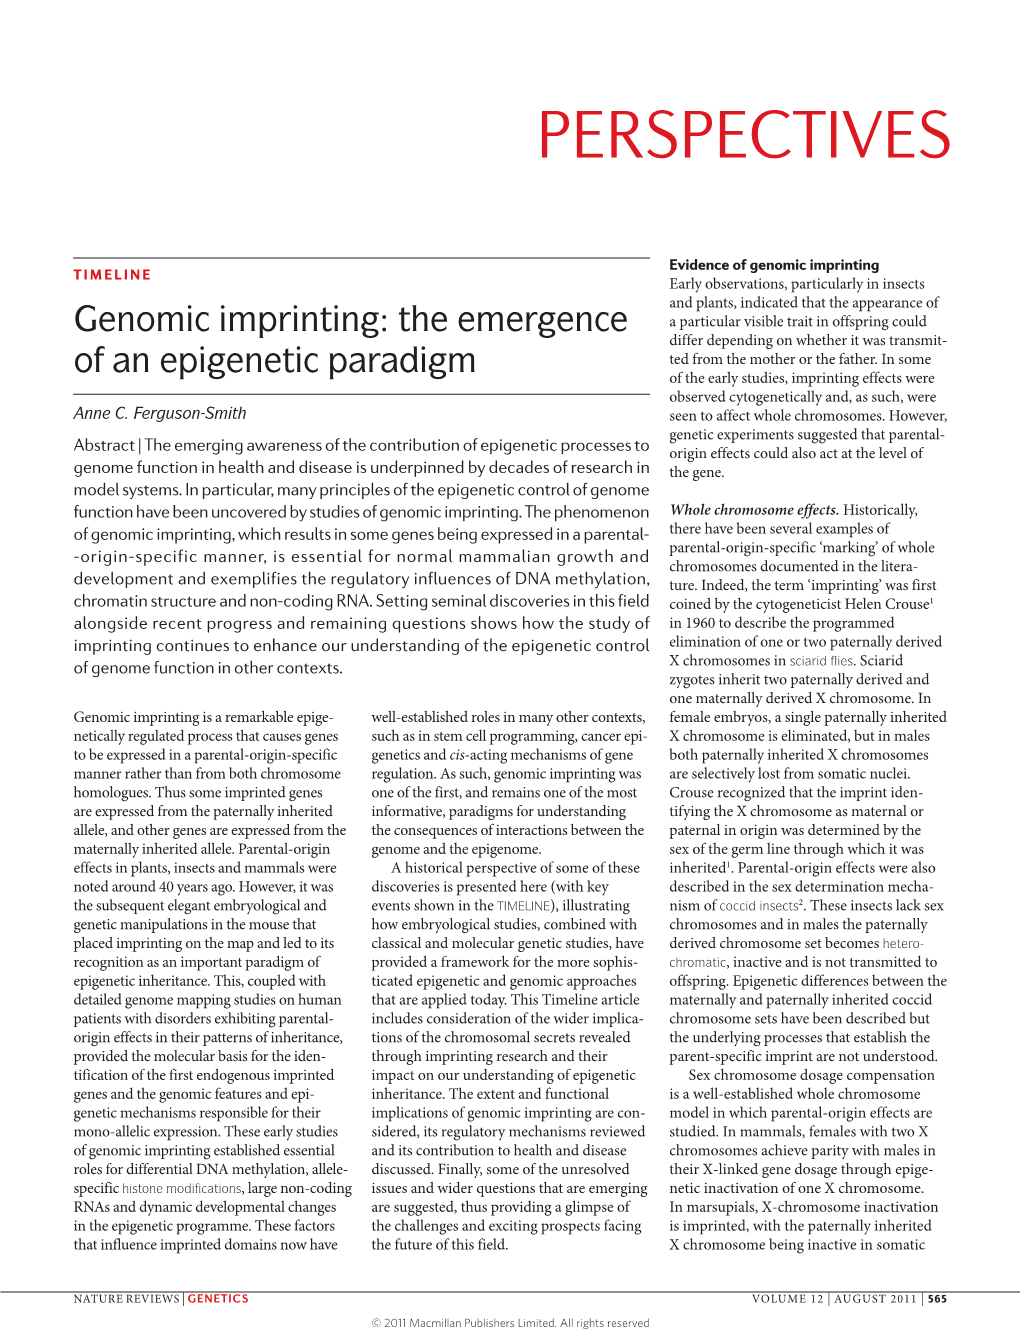 Timeline: Genomic Imprinting: the Emergence of an Epigenetic Paradigm